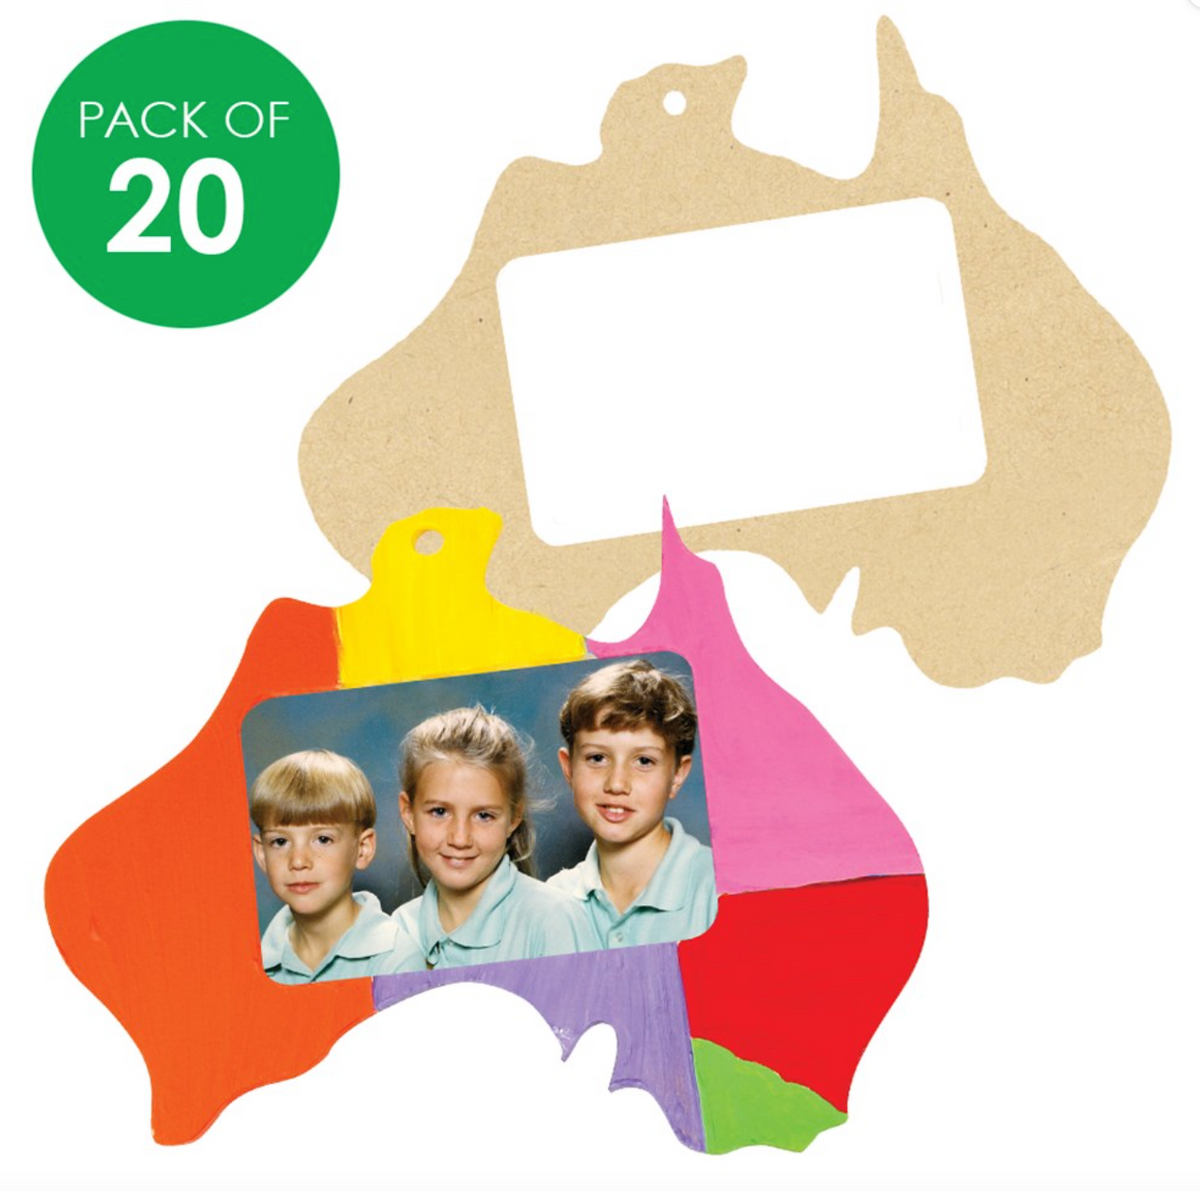 Wooden Mainland Australia Frames - Pack of 20